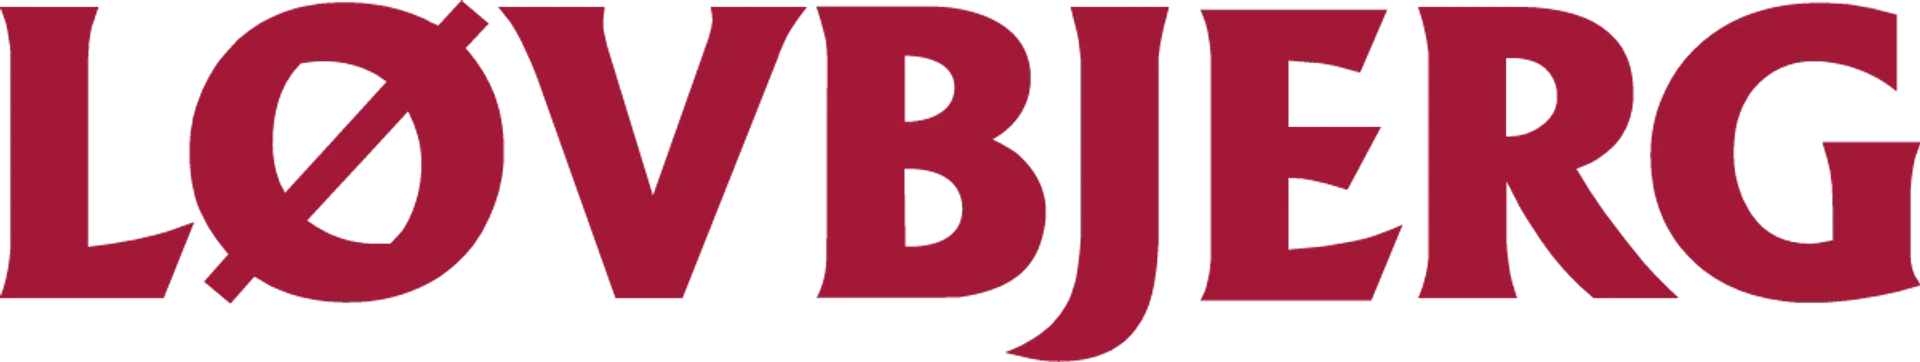 LØVBJERG logo